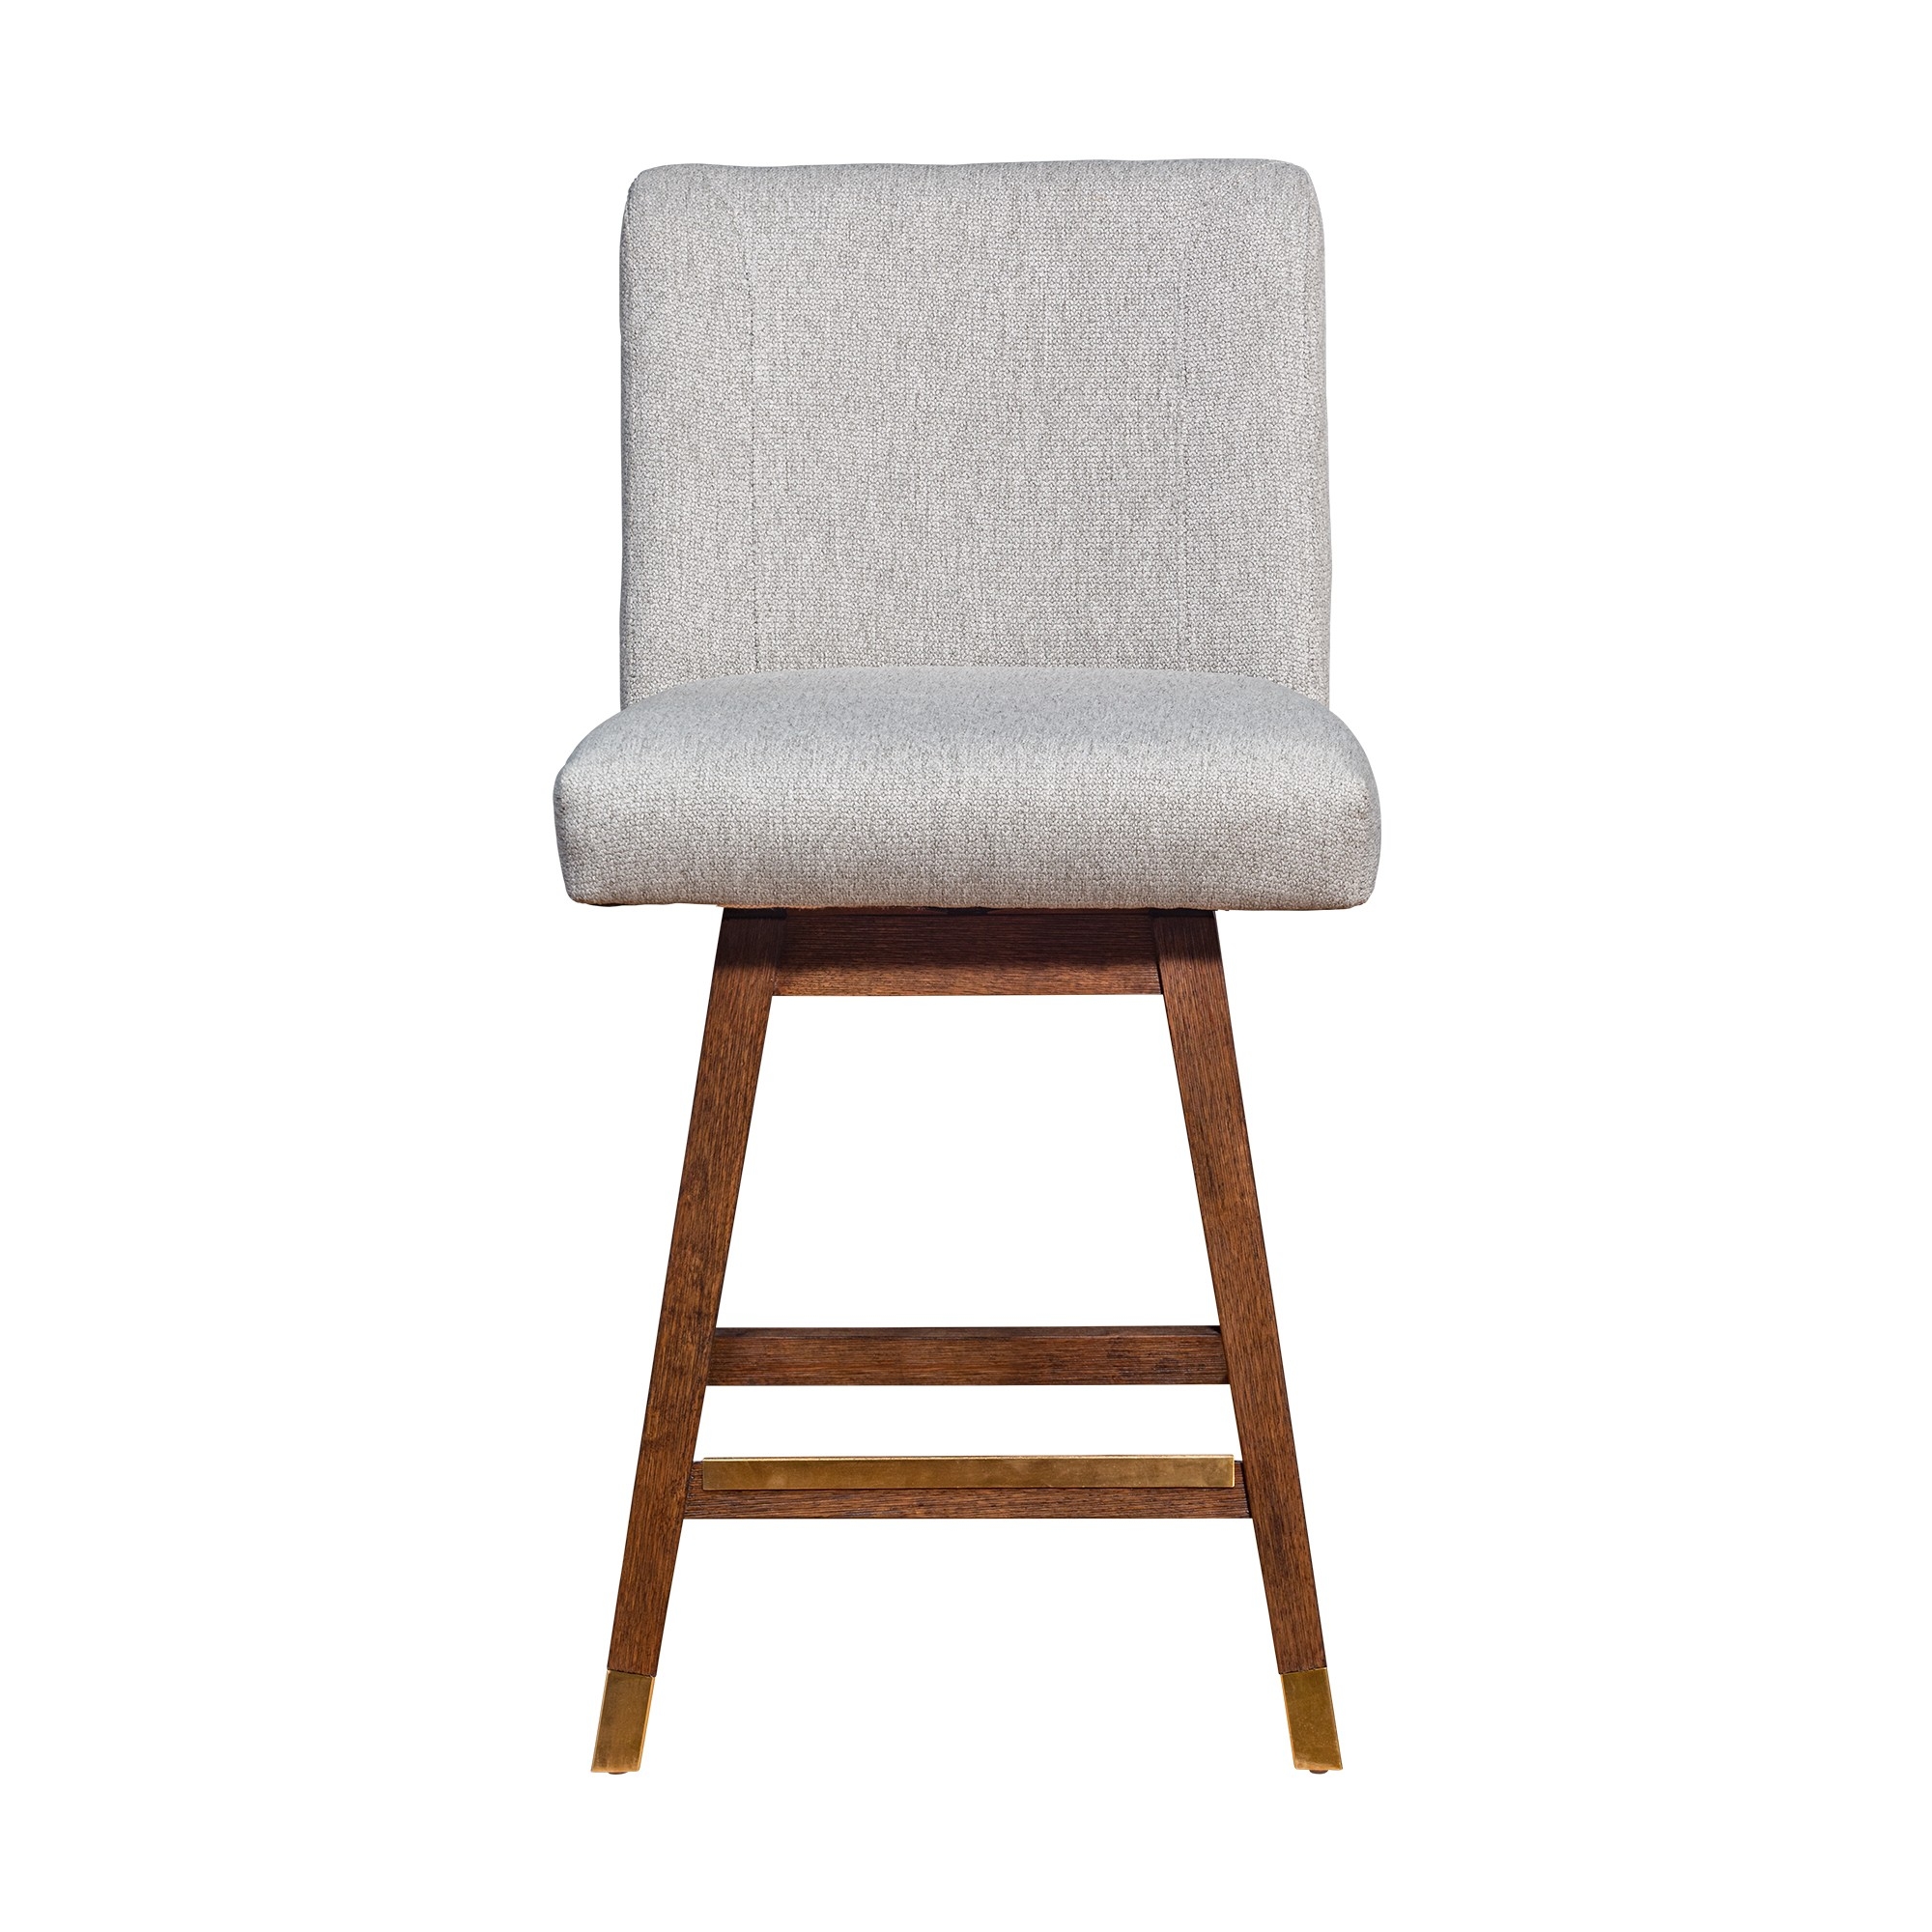 Lia 26 Inch Swivel Counter Stool Chair, Brown Wood, Light Gray Polyester- Saltoro Sherpi